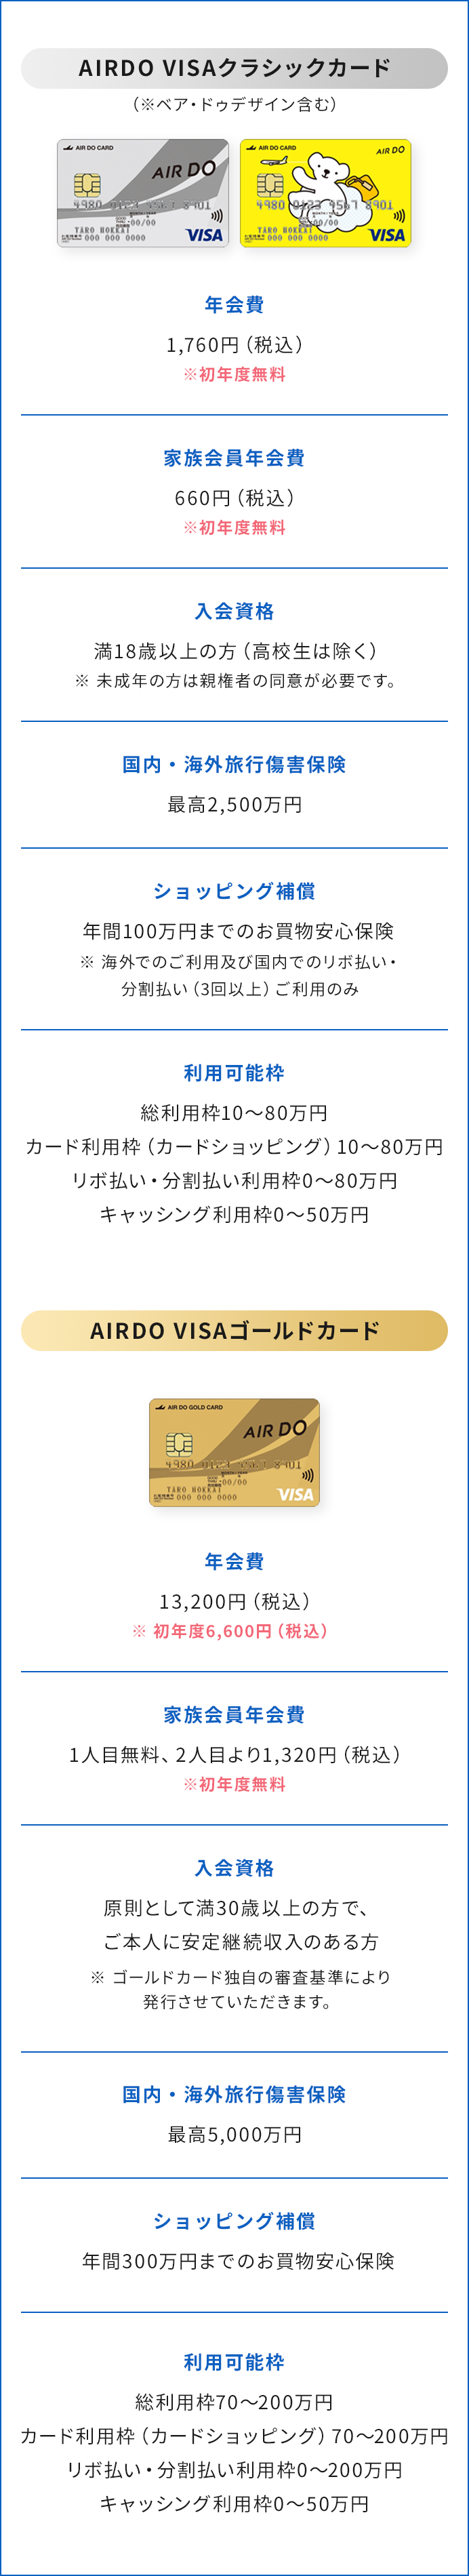 Airdoカード新規入会キャンペーン キャンペーン 北海道発着の飛行機予約 空席照会 Airdo エア ドゥ